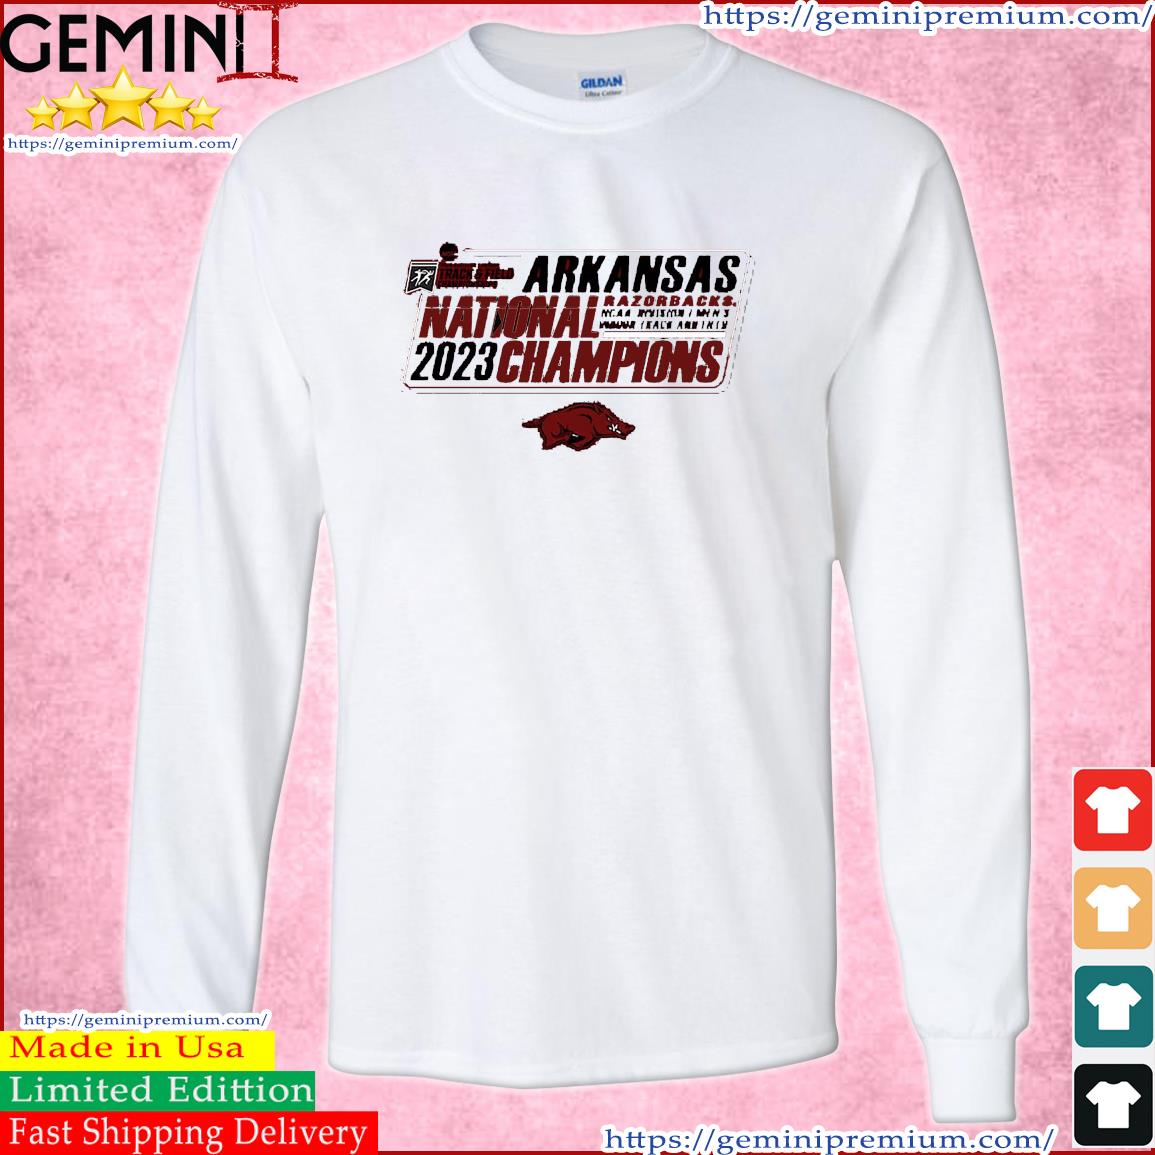 Arkansas Razorbacks 2023 NCAA Men's Indoor Track & Field National Champions T-Shirt Long Sleeve Tee